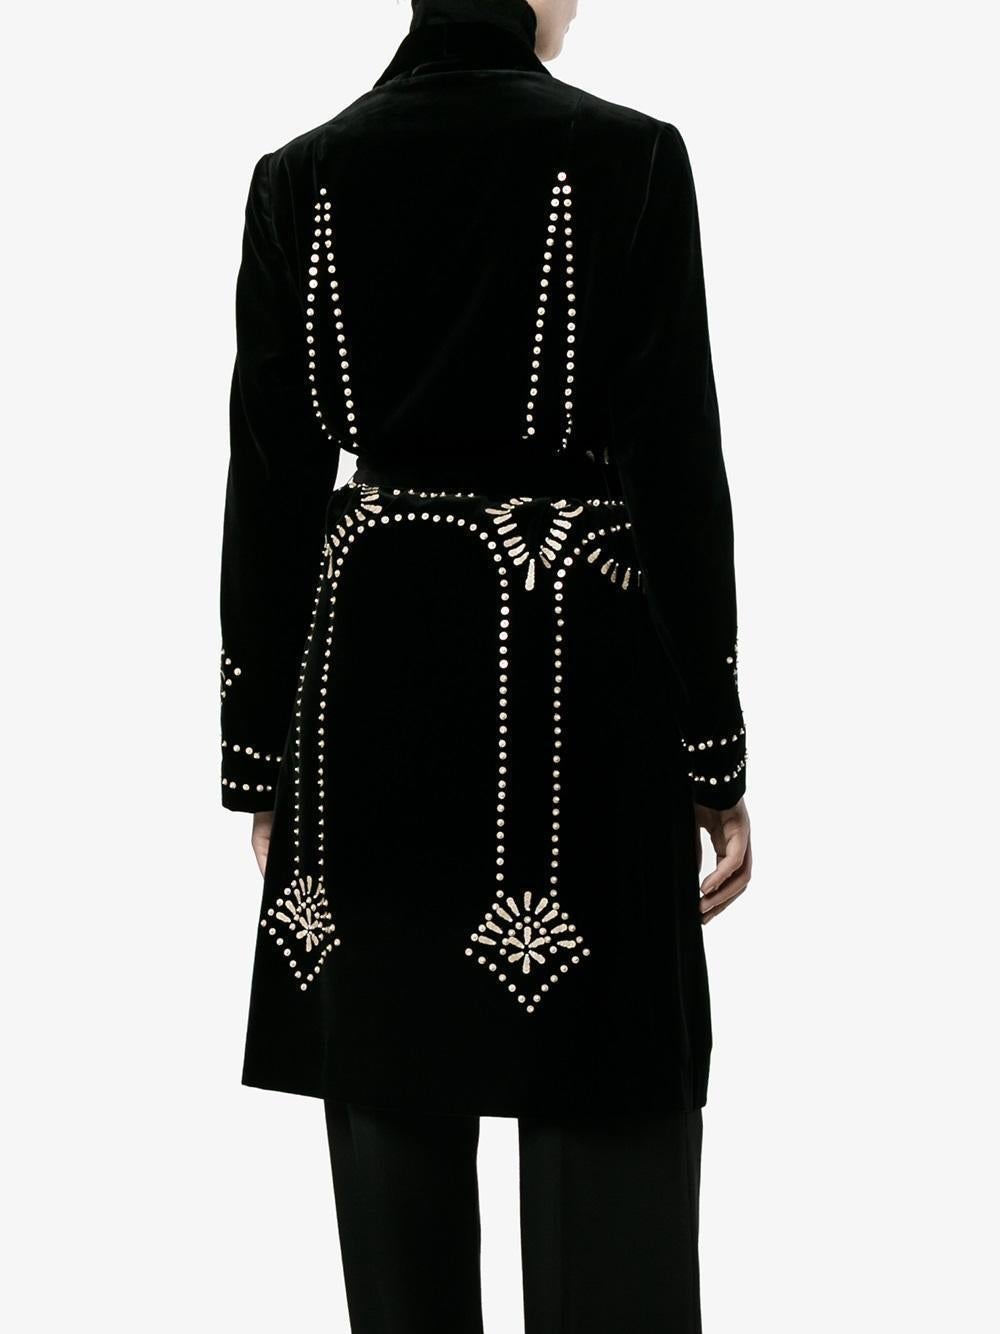 New DRIES VAN NOTEN 'Ravik' Black Sequin Embellished Velvet Coat FR42 US10 In New Condition For Sale In Brossard, QC